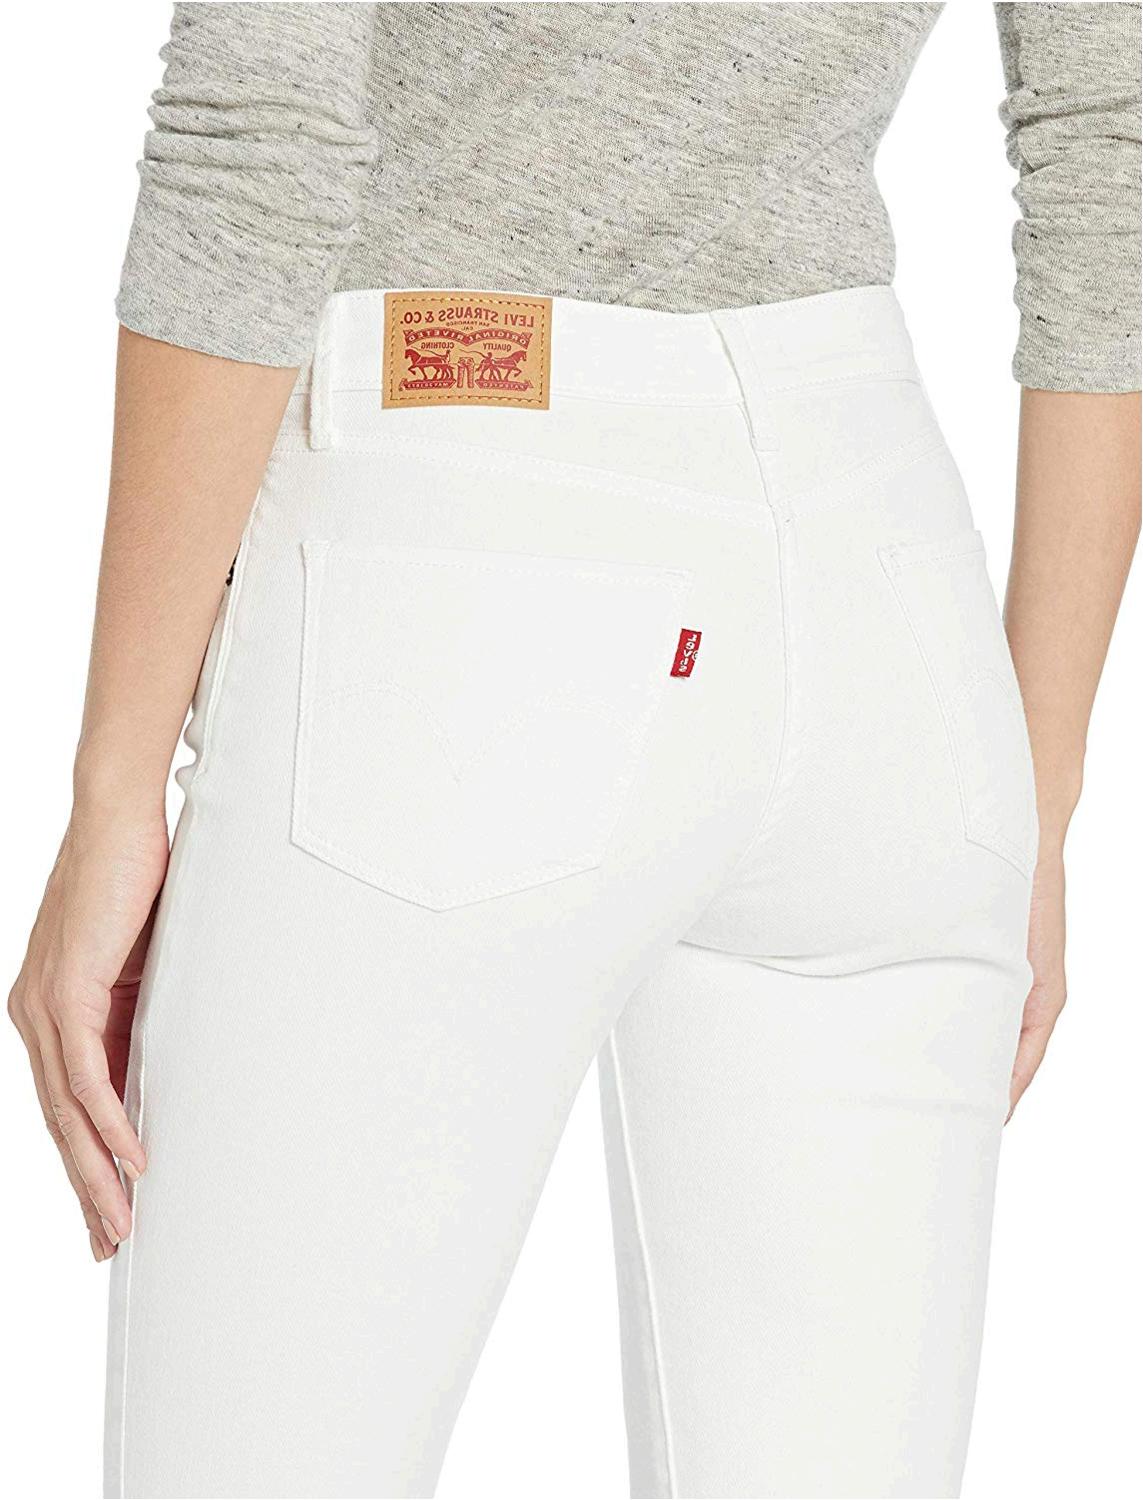 Levi's Women's Classic Mid Rise Skinny Jeans, Pure, Pure White, Size 29 Short GU | eBay